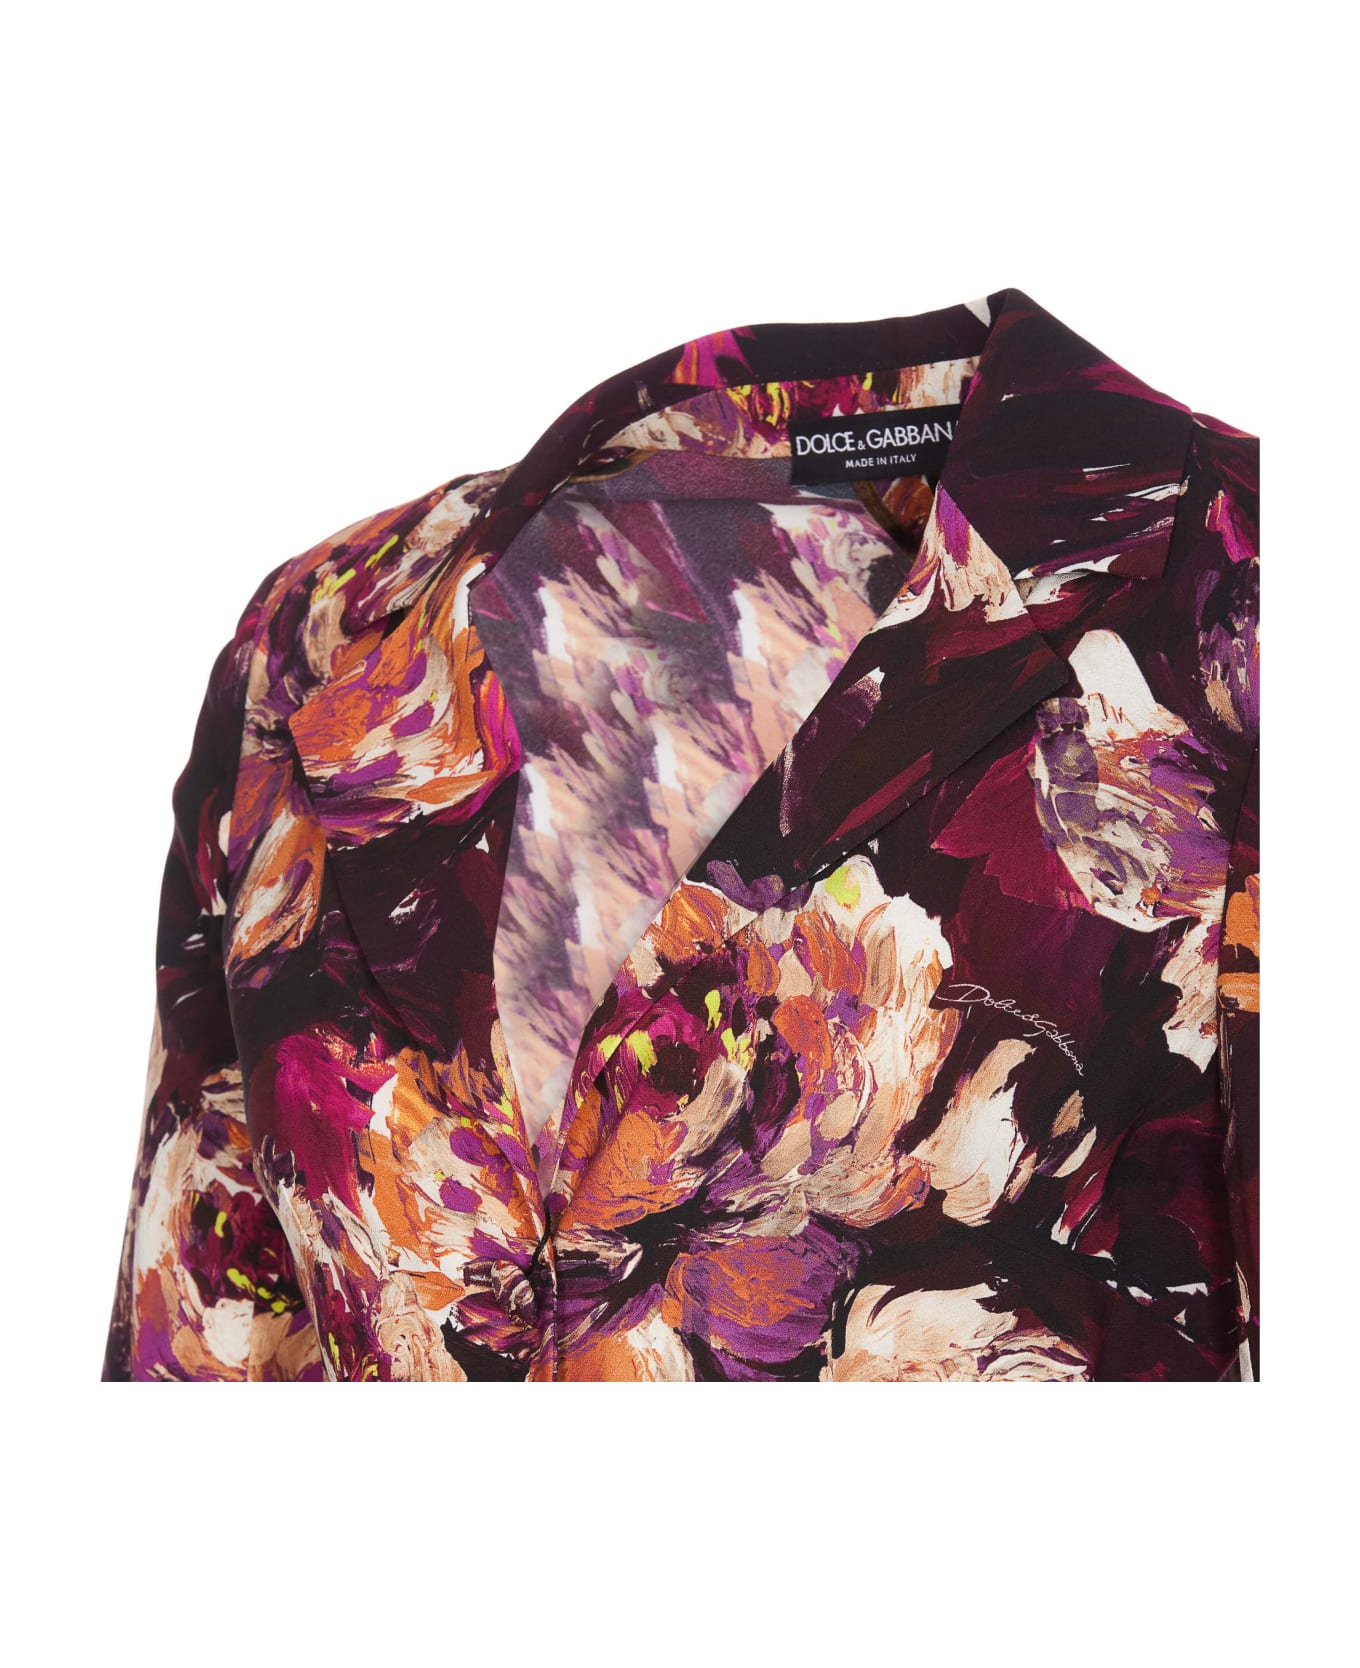 dolce Kids & Gabbana Peony Print Jacket - Multicolor